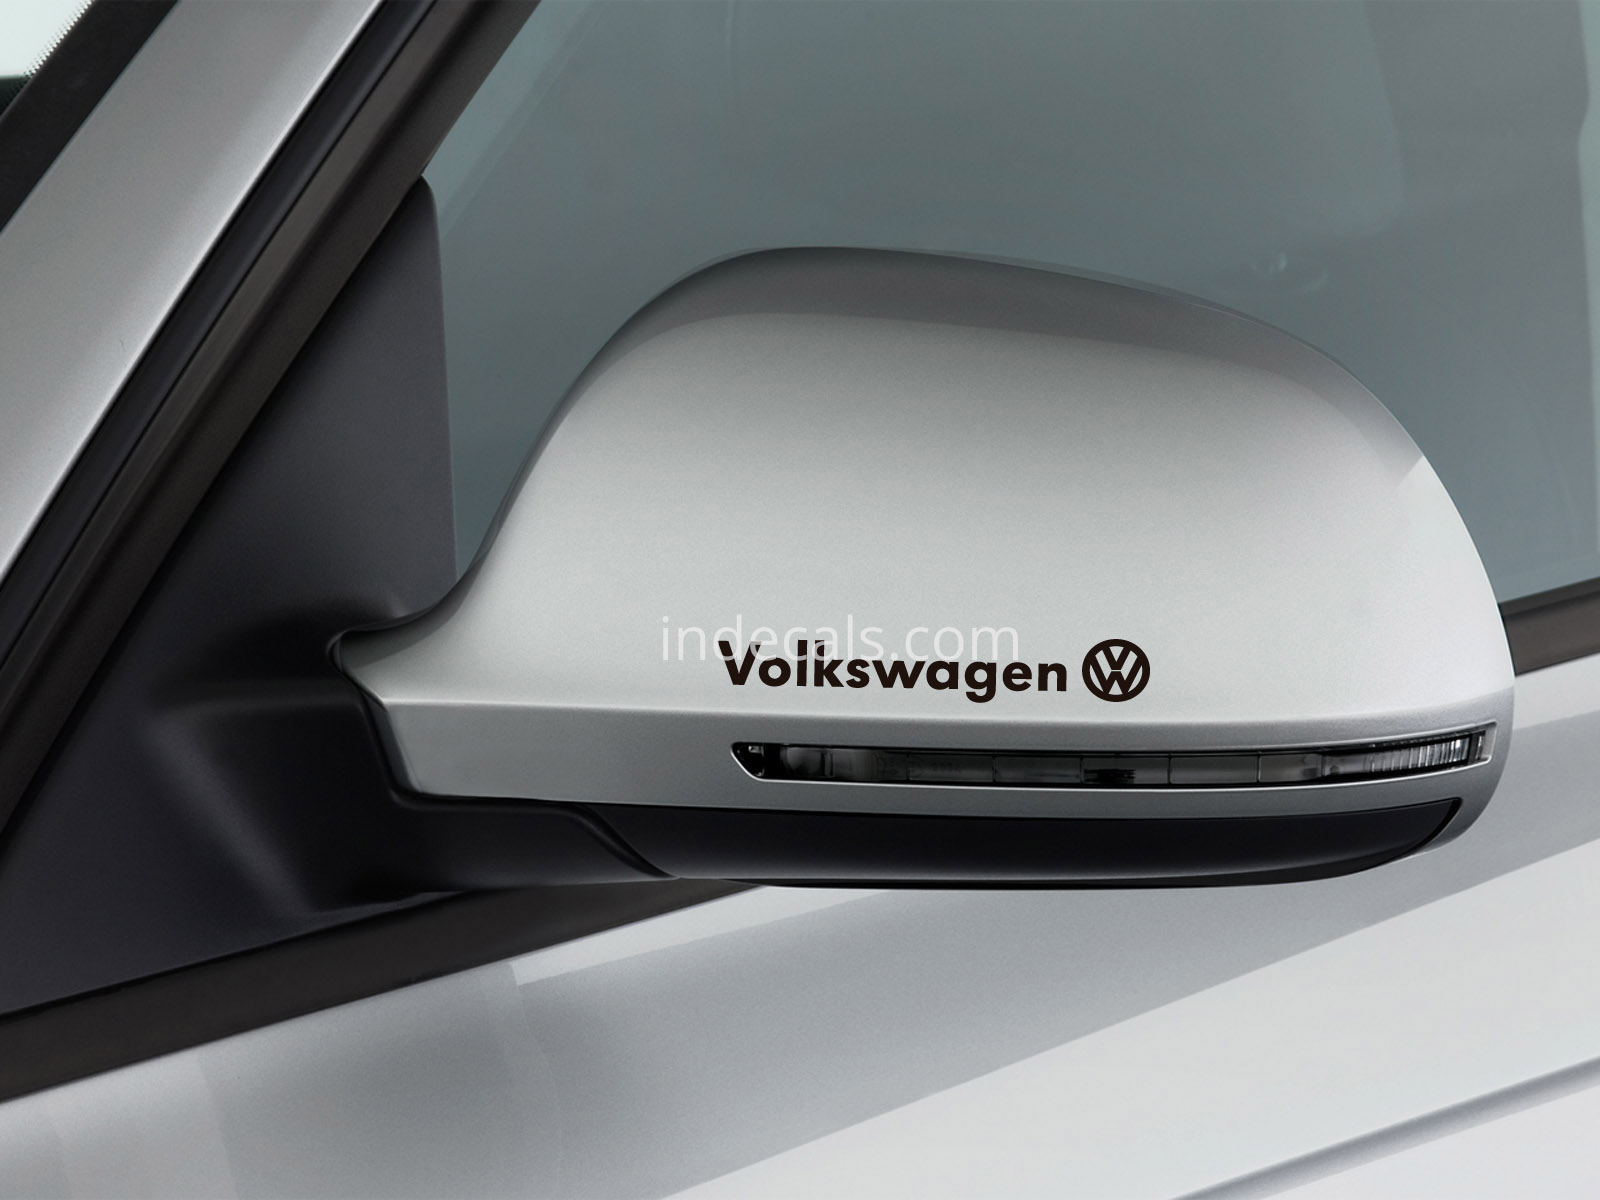 3 x Volkswagen Stickers for Mirrors - Black